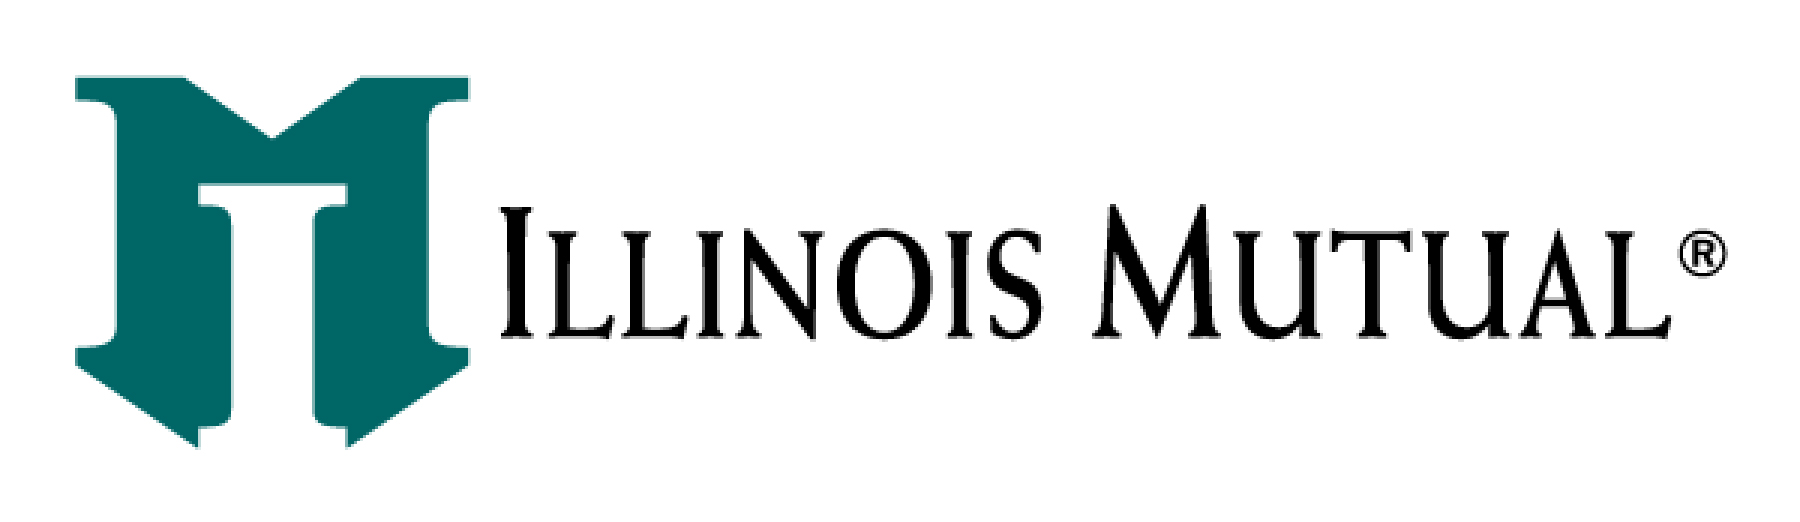 Illinois_Mutual_Logo